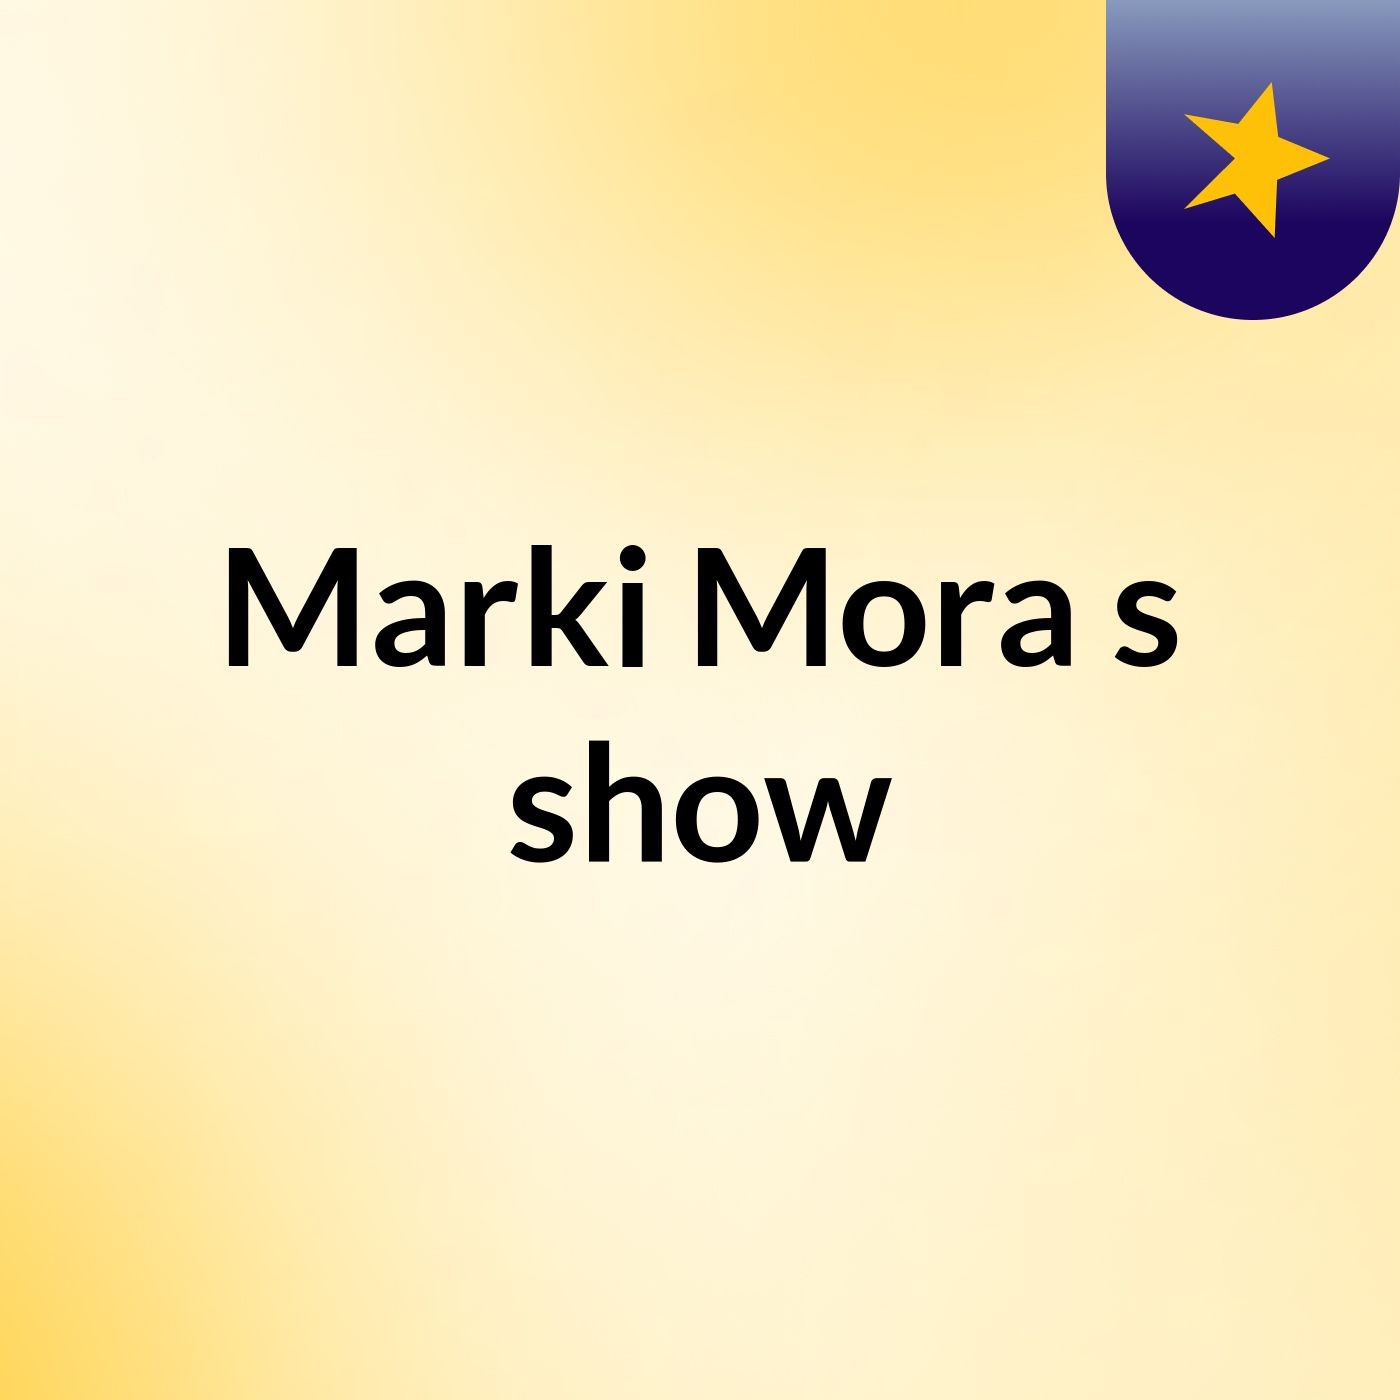 Marki Mora's show